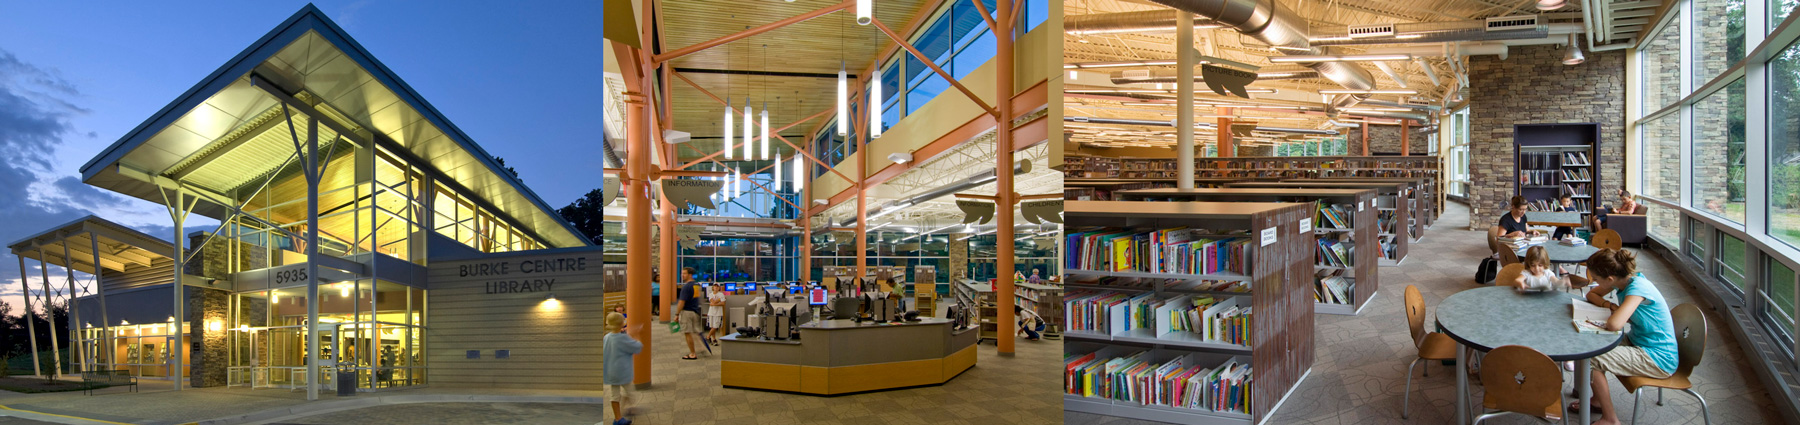 Burke Centre Library